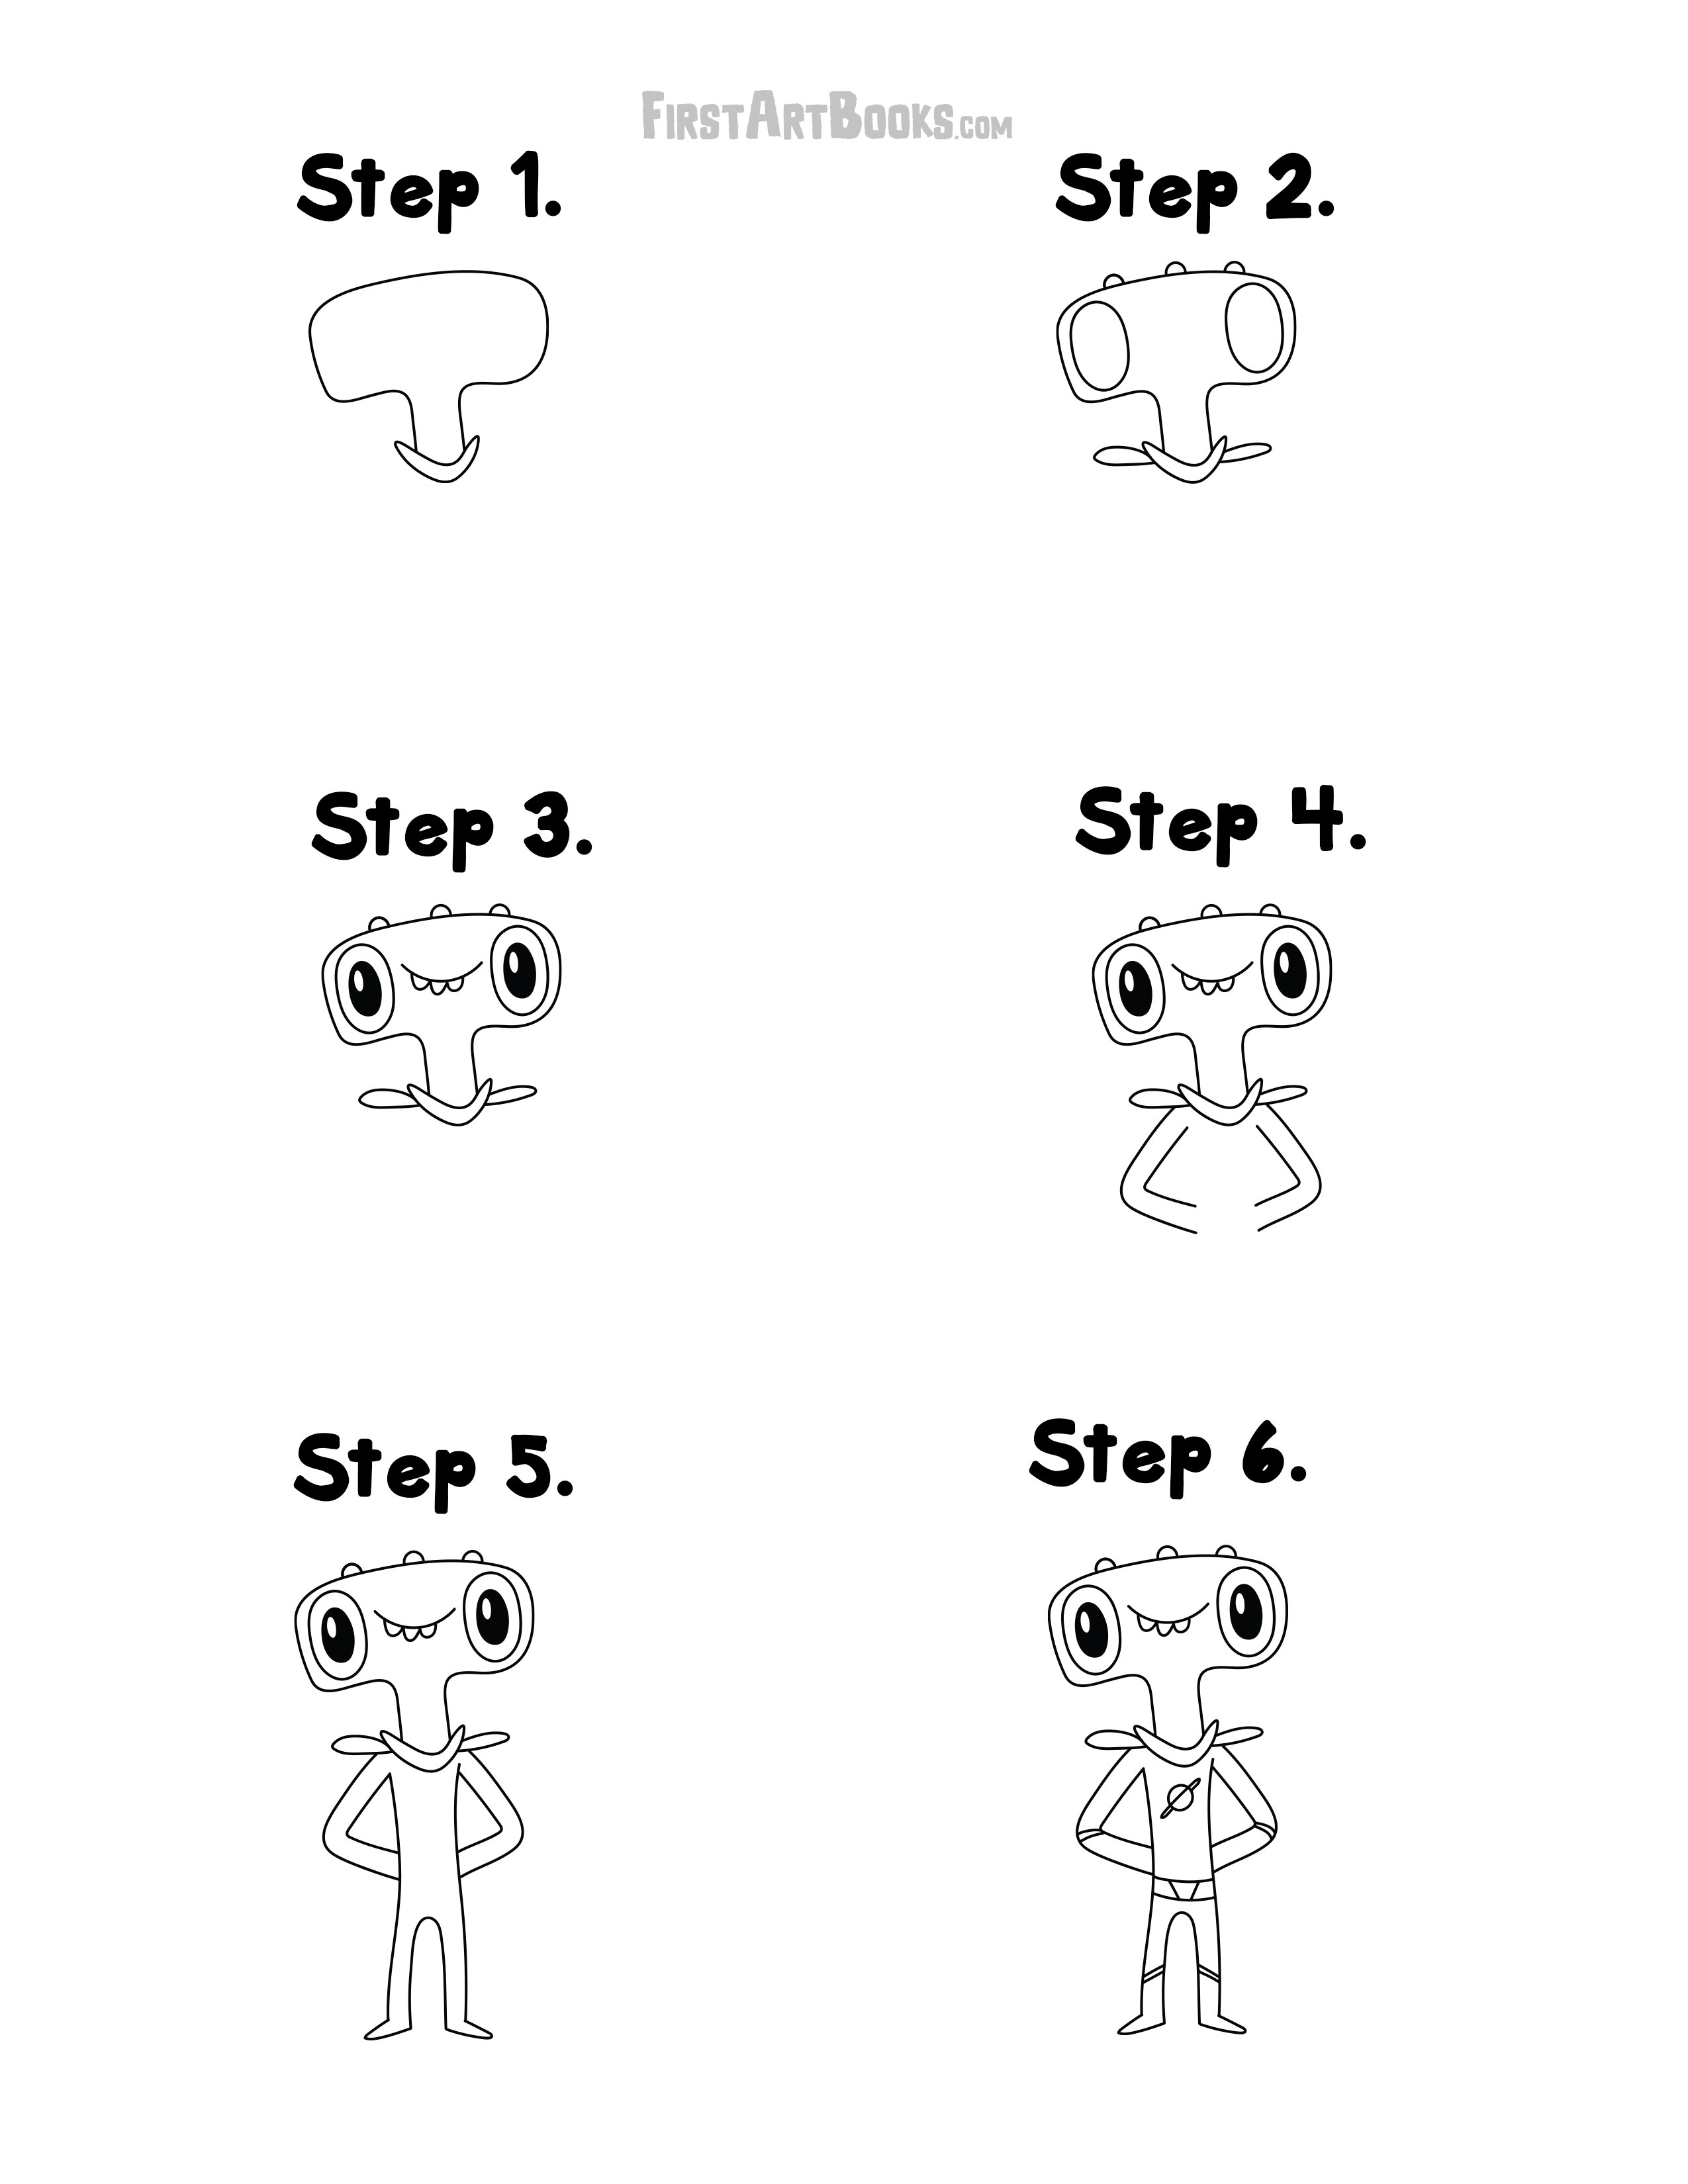 How to Draw A Cartoon Alien